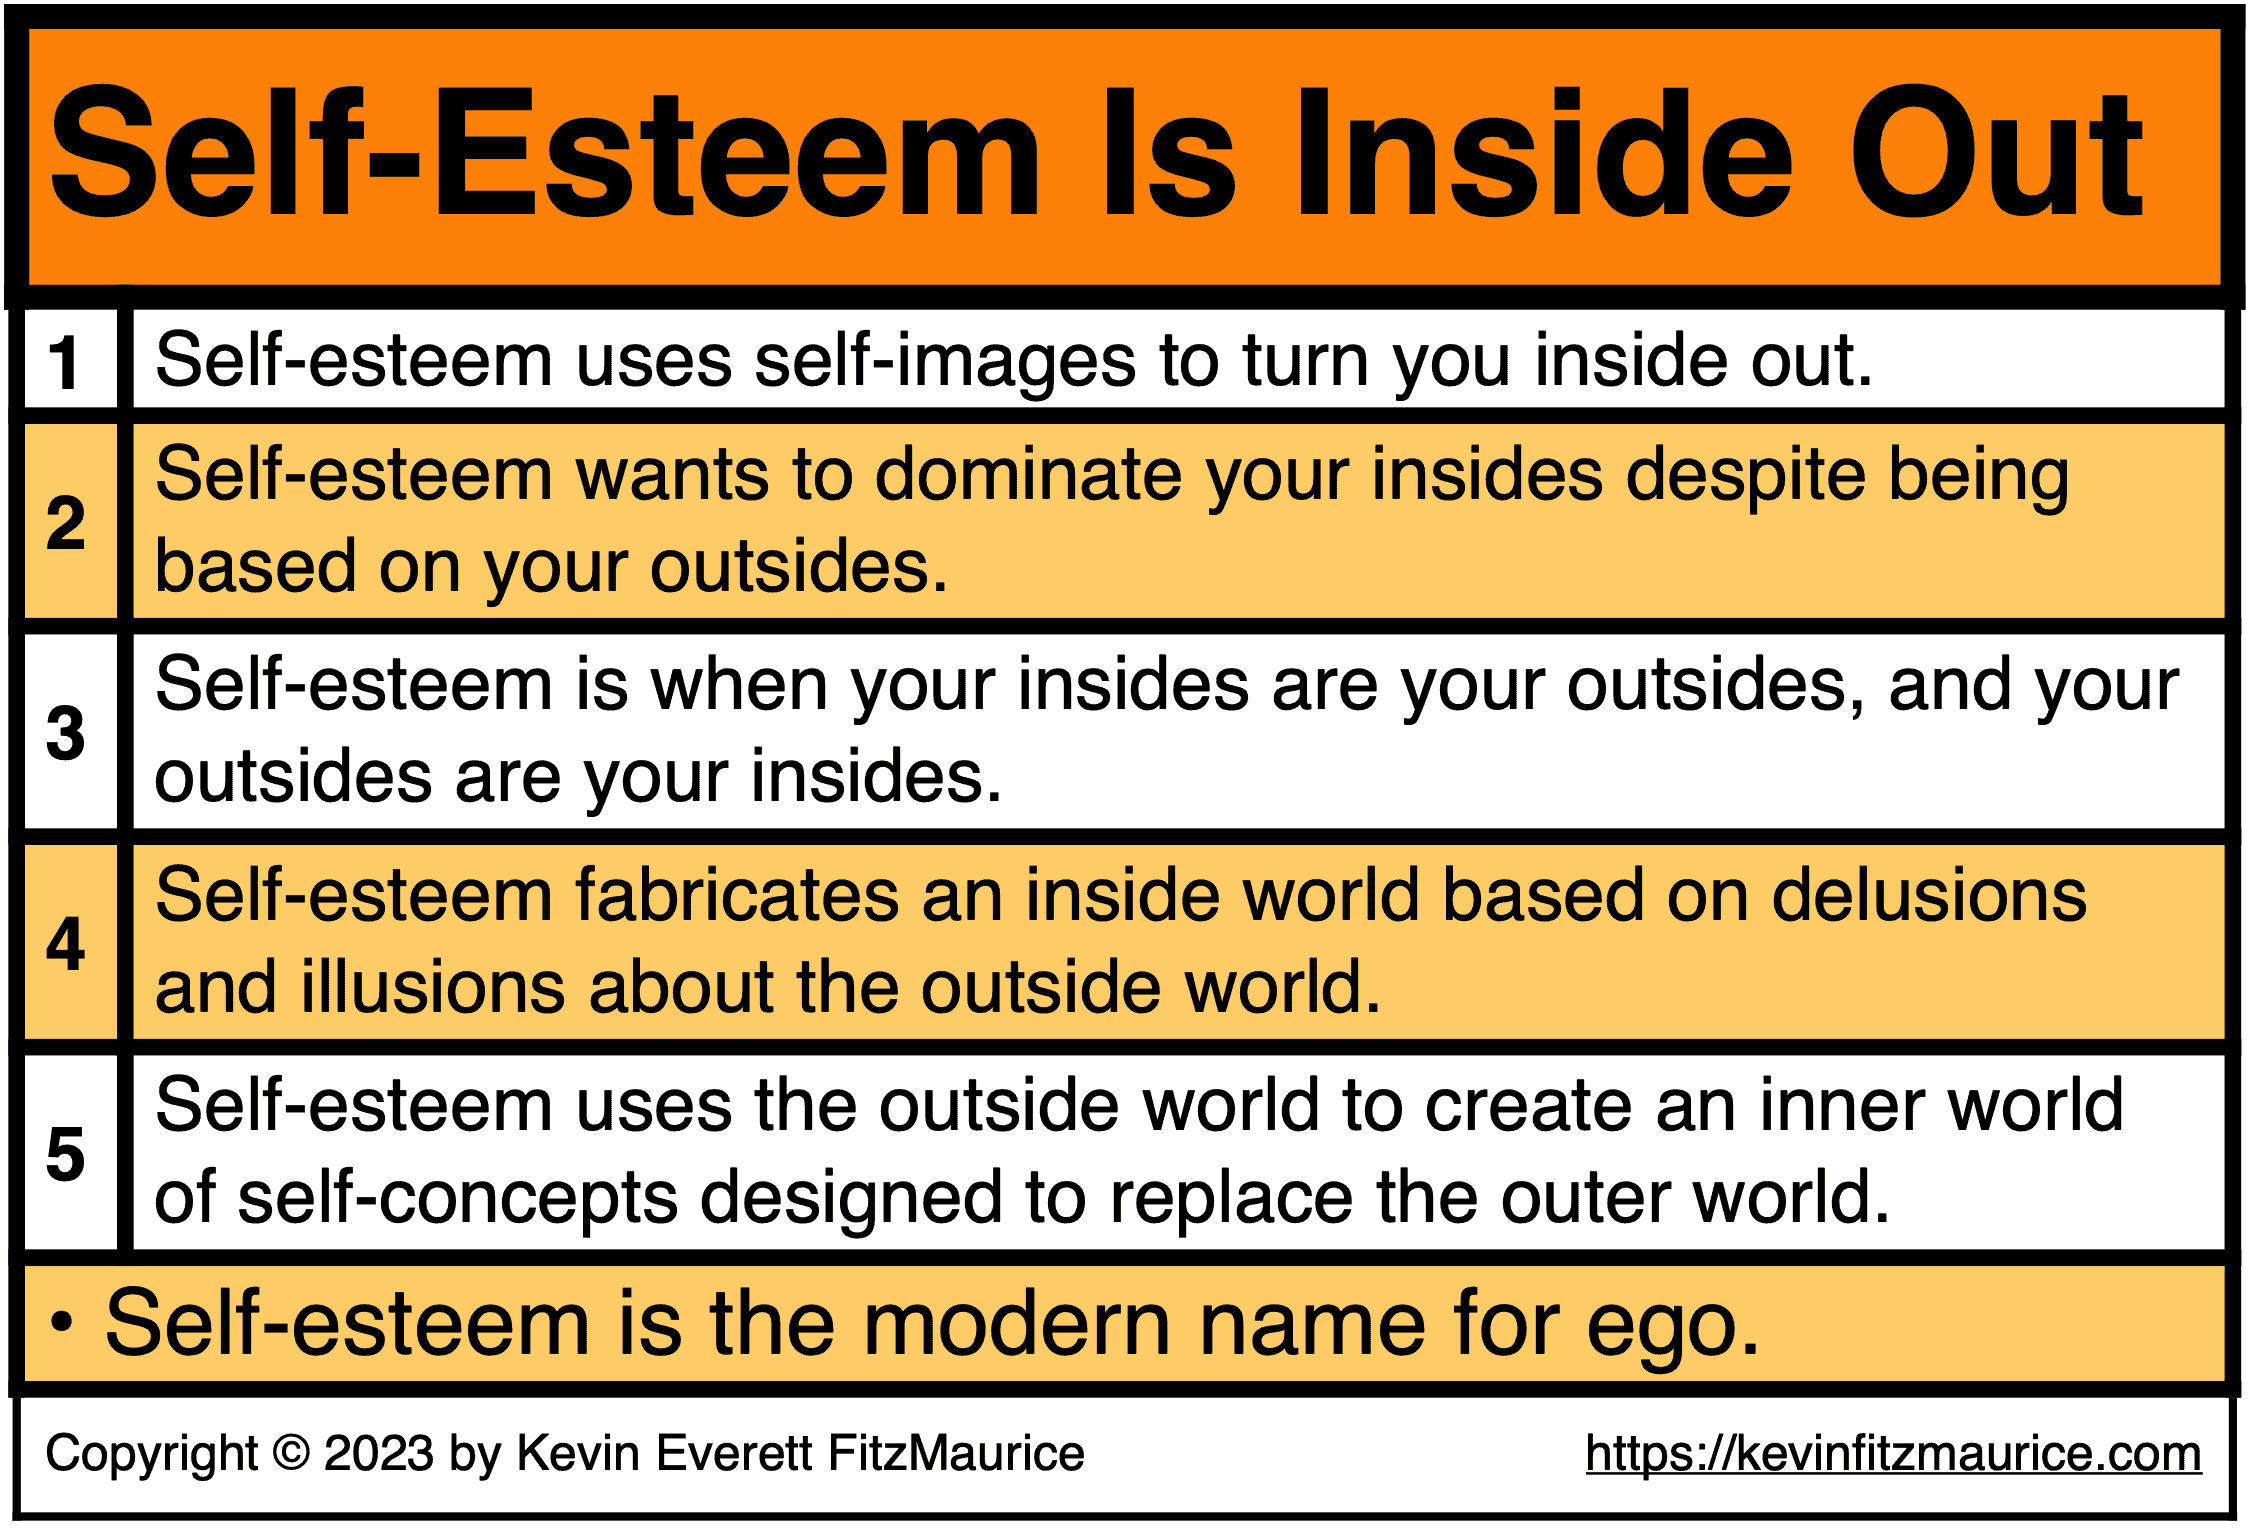 Self-Esteem Is Inside Out